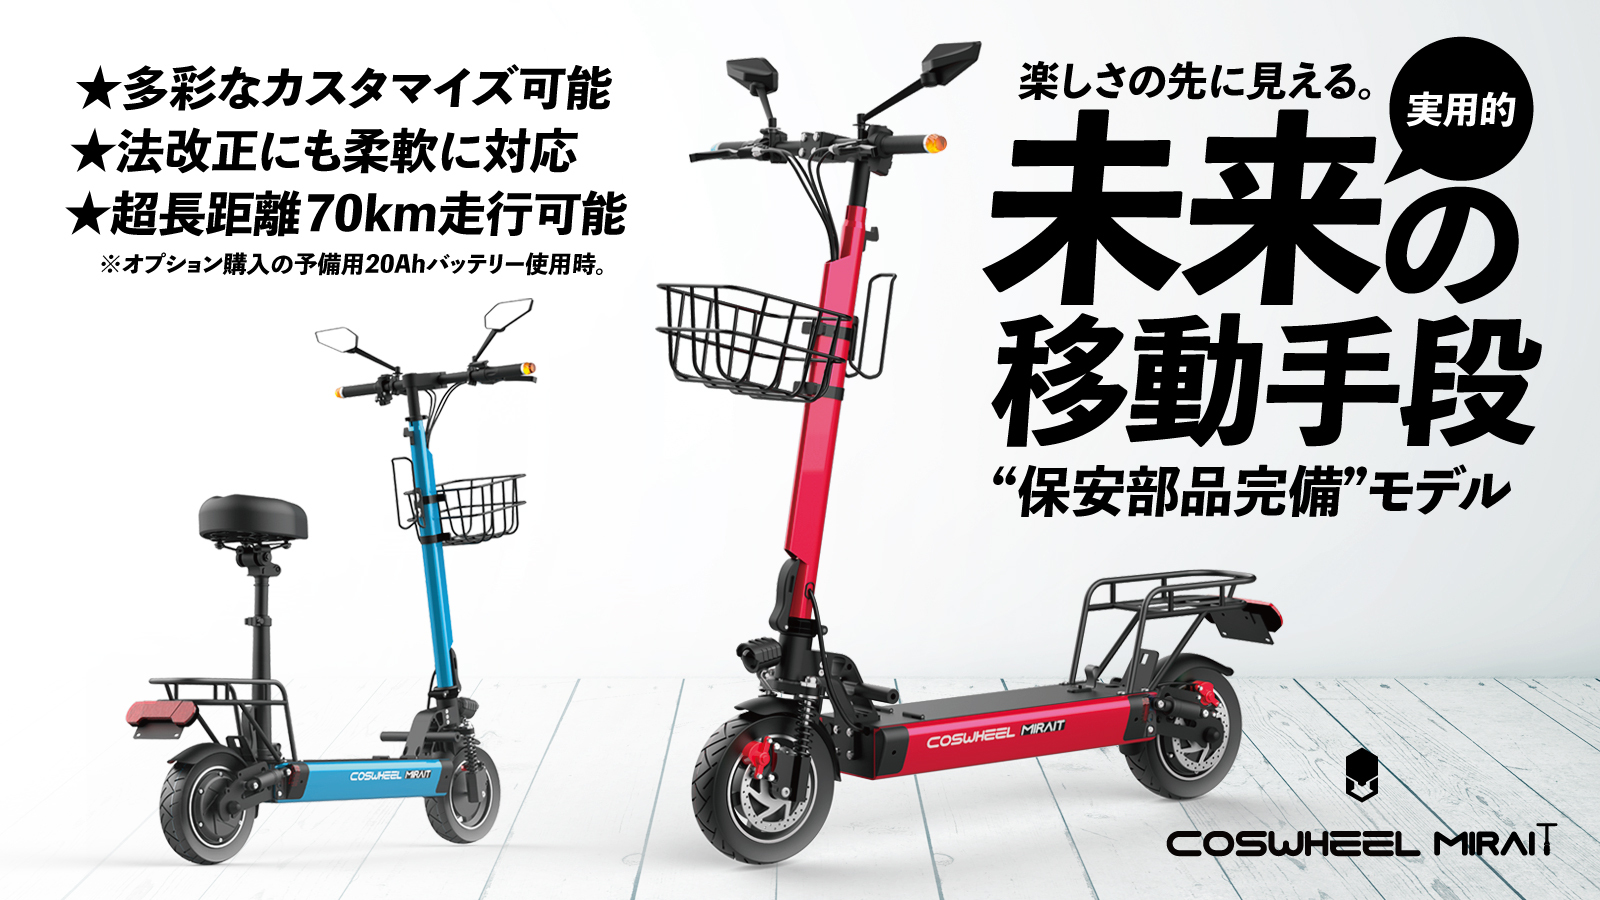 COSWHEEL新型電動キックボード「MIRAI T」を3月17日Makuakeにて先行 